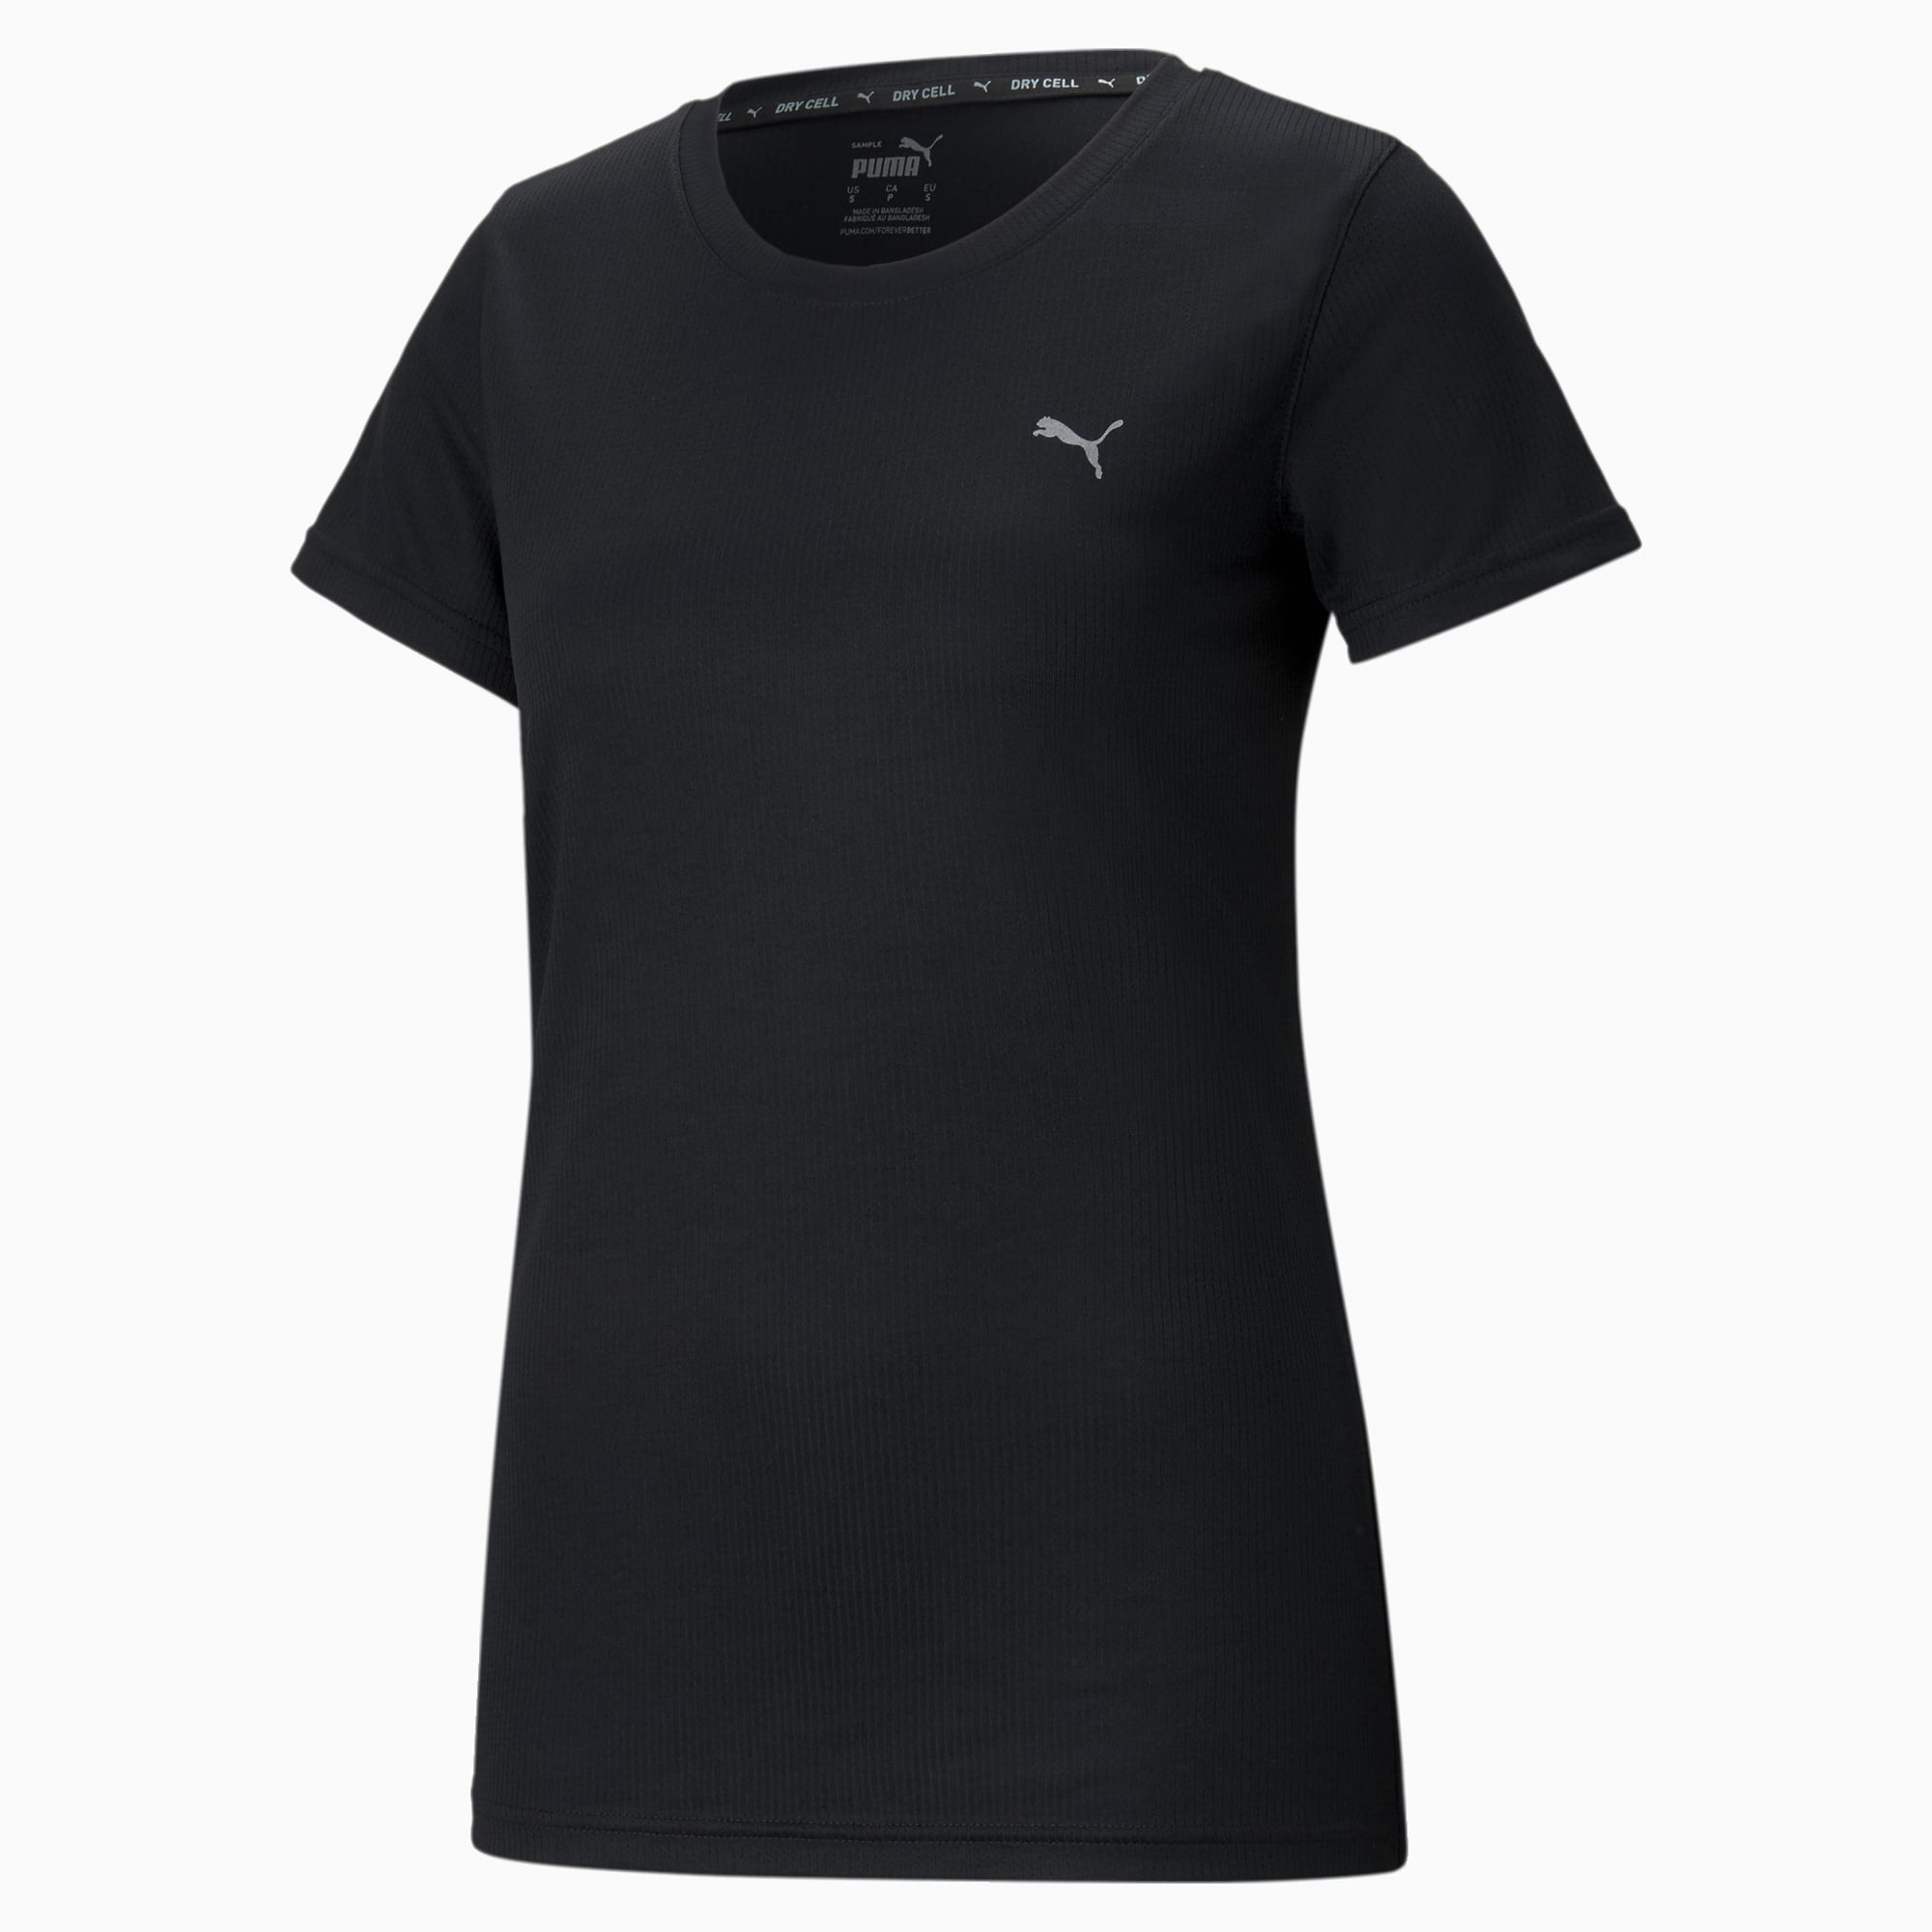 PUMA Performance Women's Training T-Shirt, Black, Size XS, Clothing